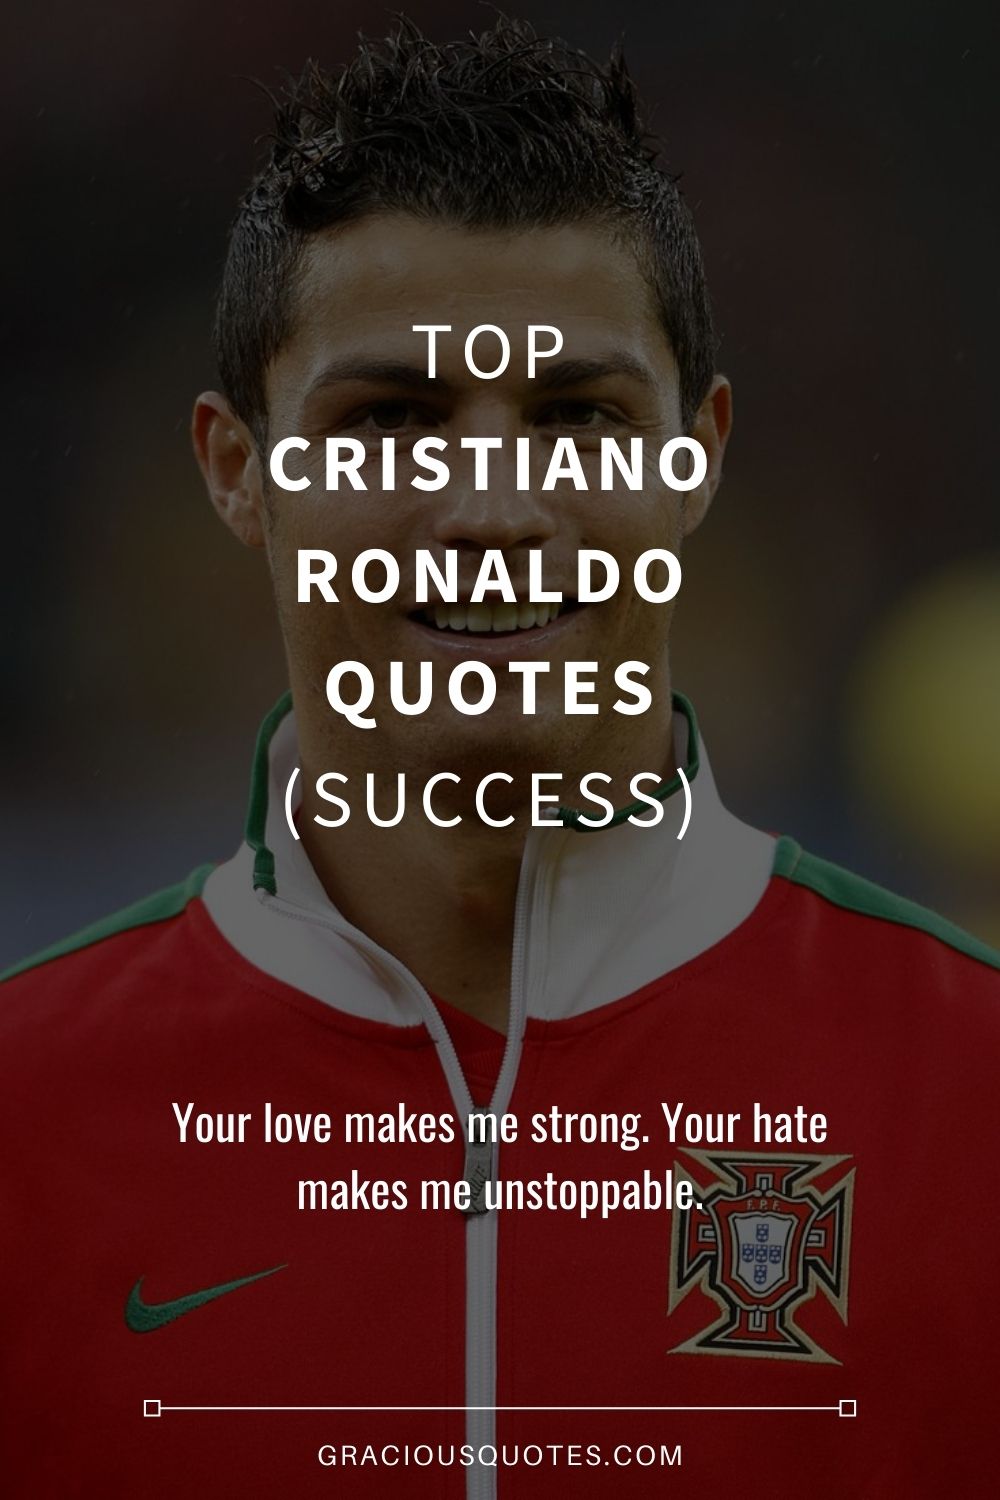 Top Cristiano Ronaldo Quotes (SUCCESS) - Gracious Quotes